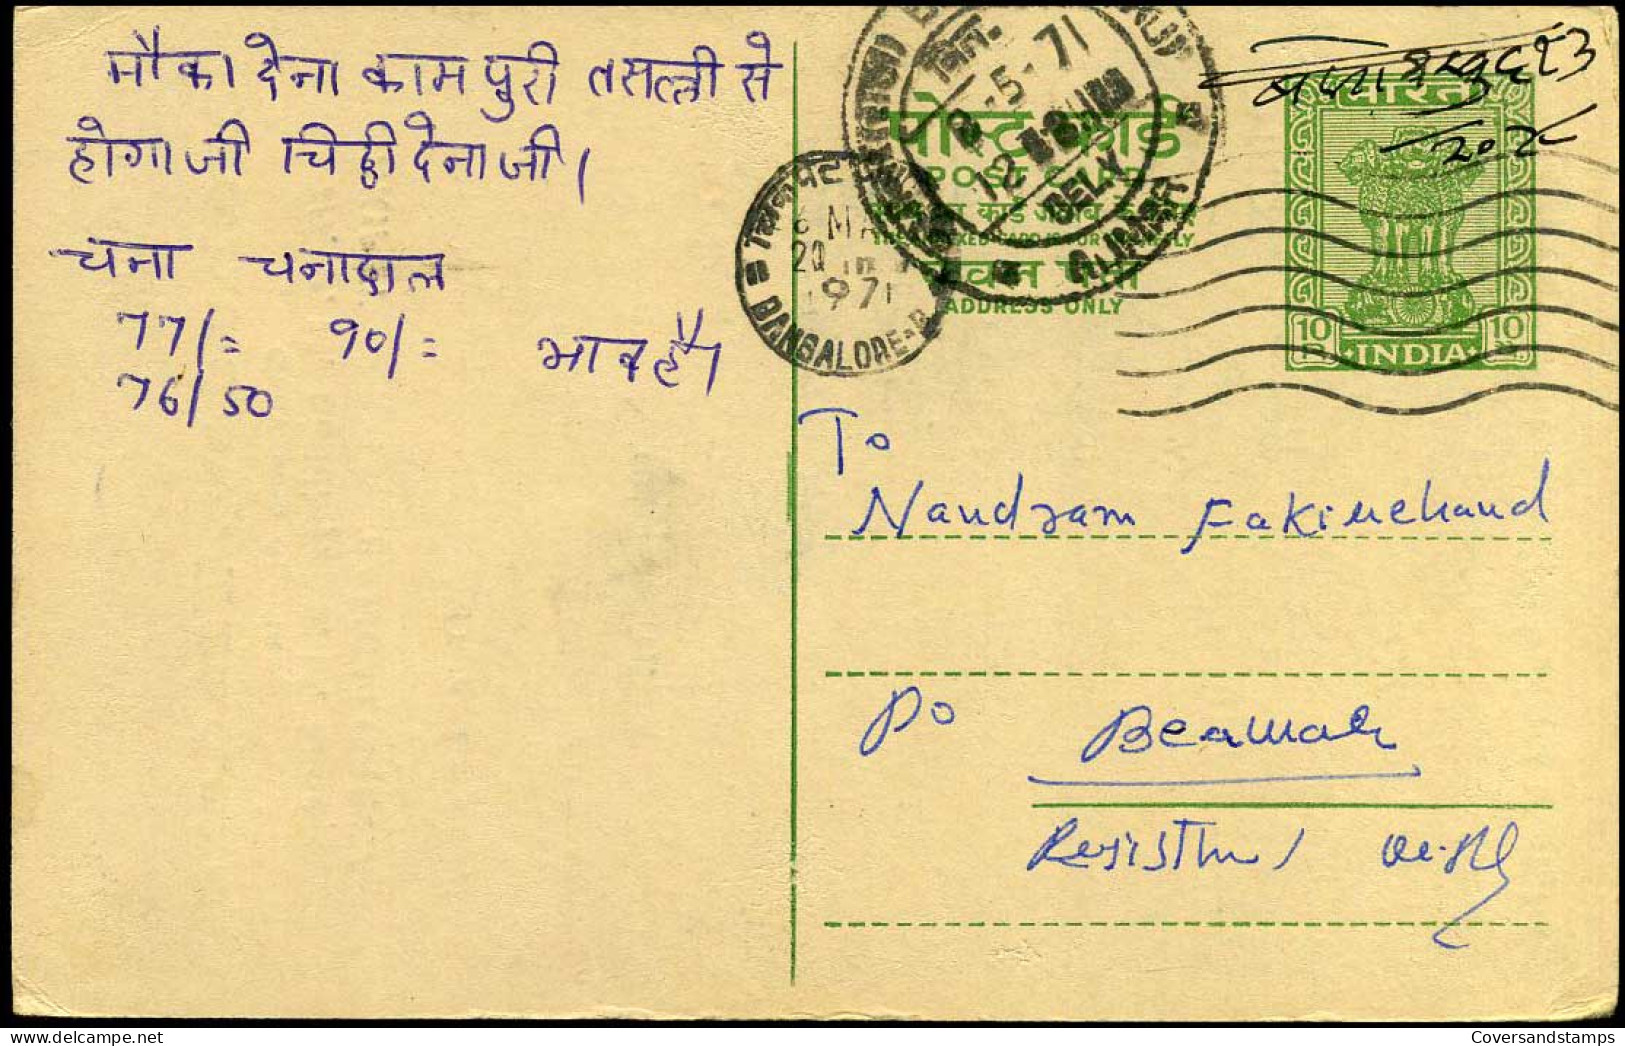 Post Card : "Mahadev Traders, Canvasing Agents, Bangalore" - Postcards